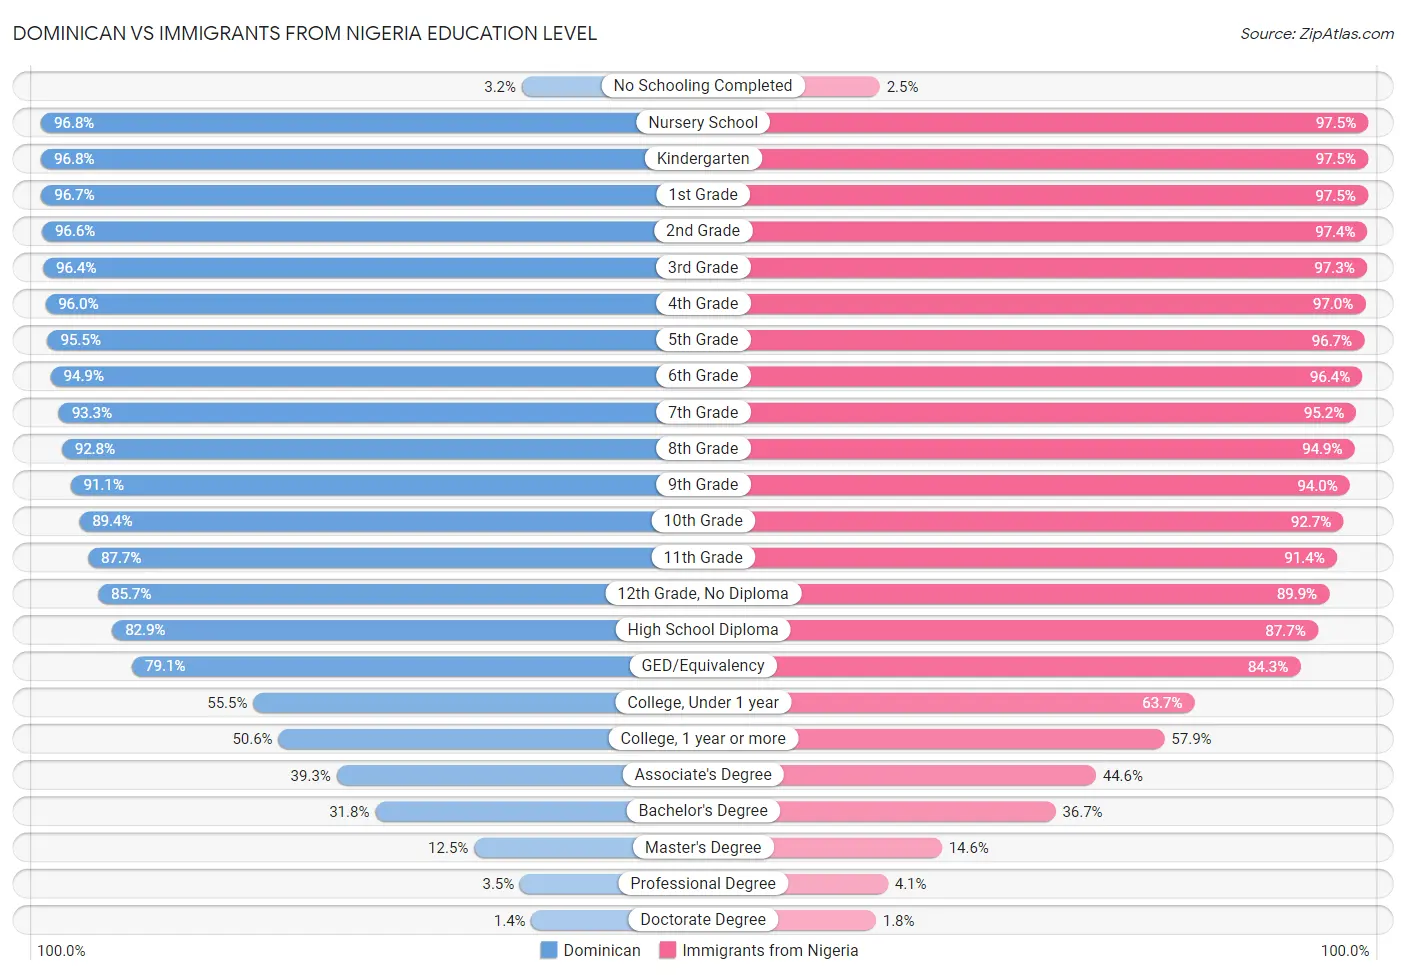 Dominican vs Immigrants from Nigeria Education Level